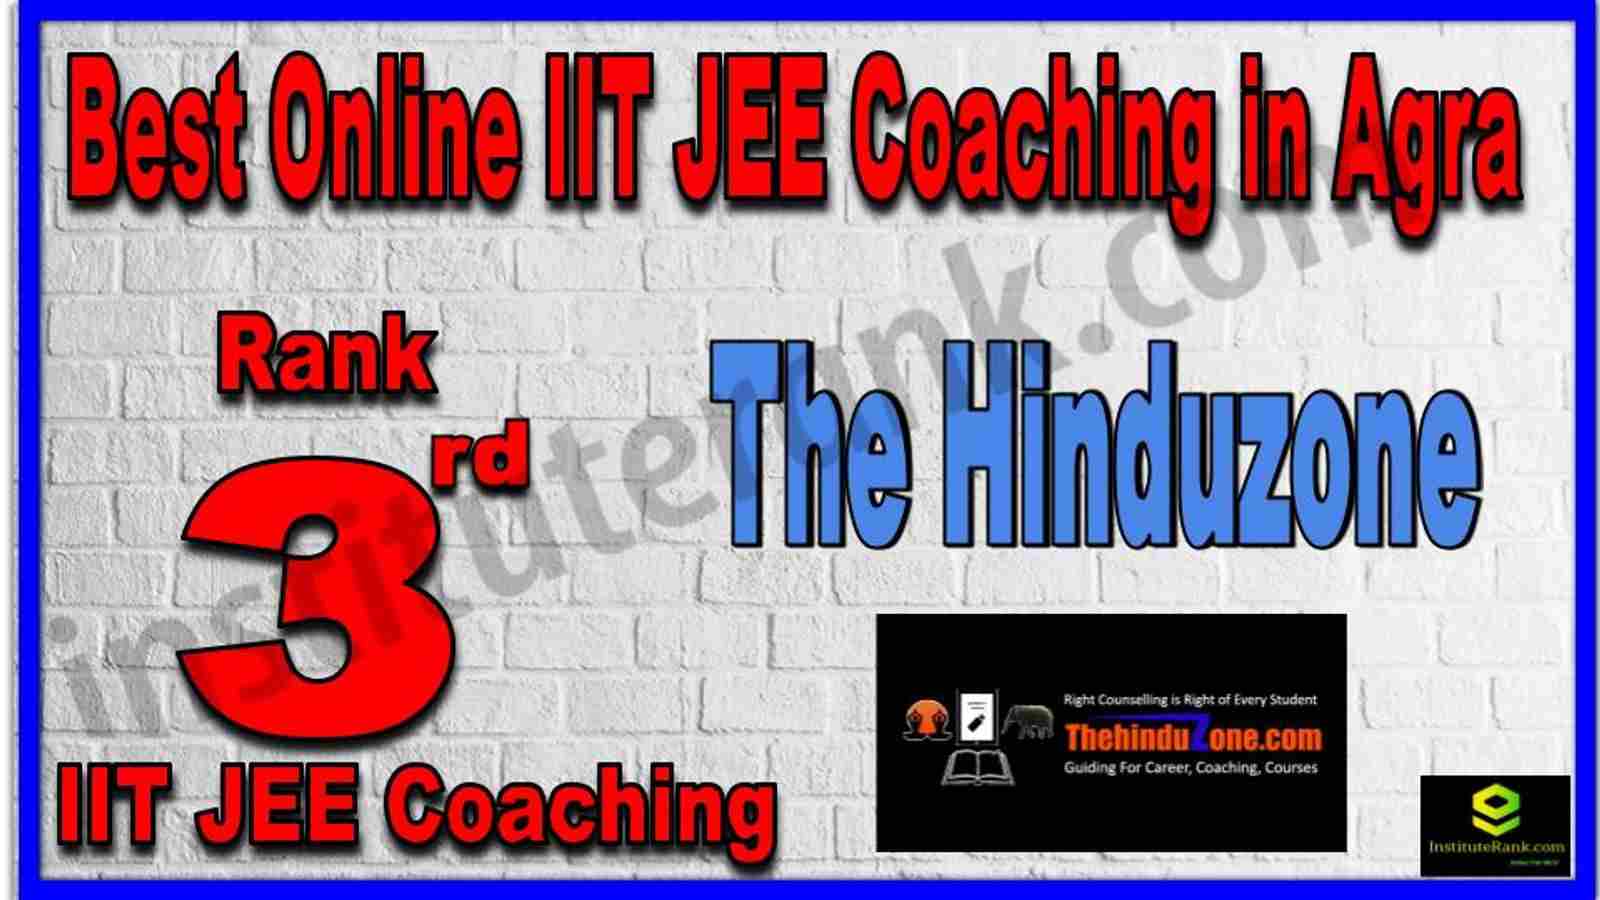 Rank 3rd Best Online IIT JEE Coaching in Agra